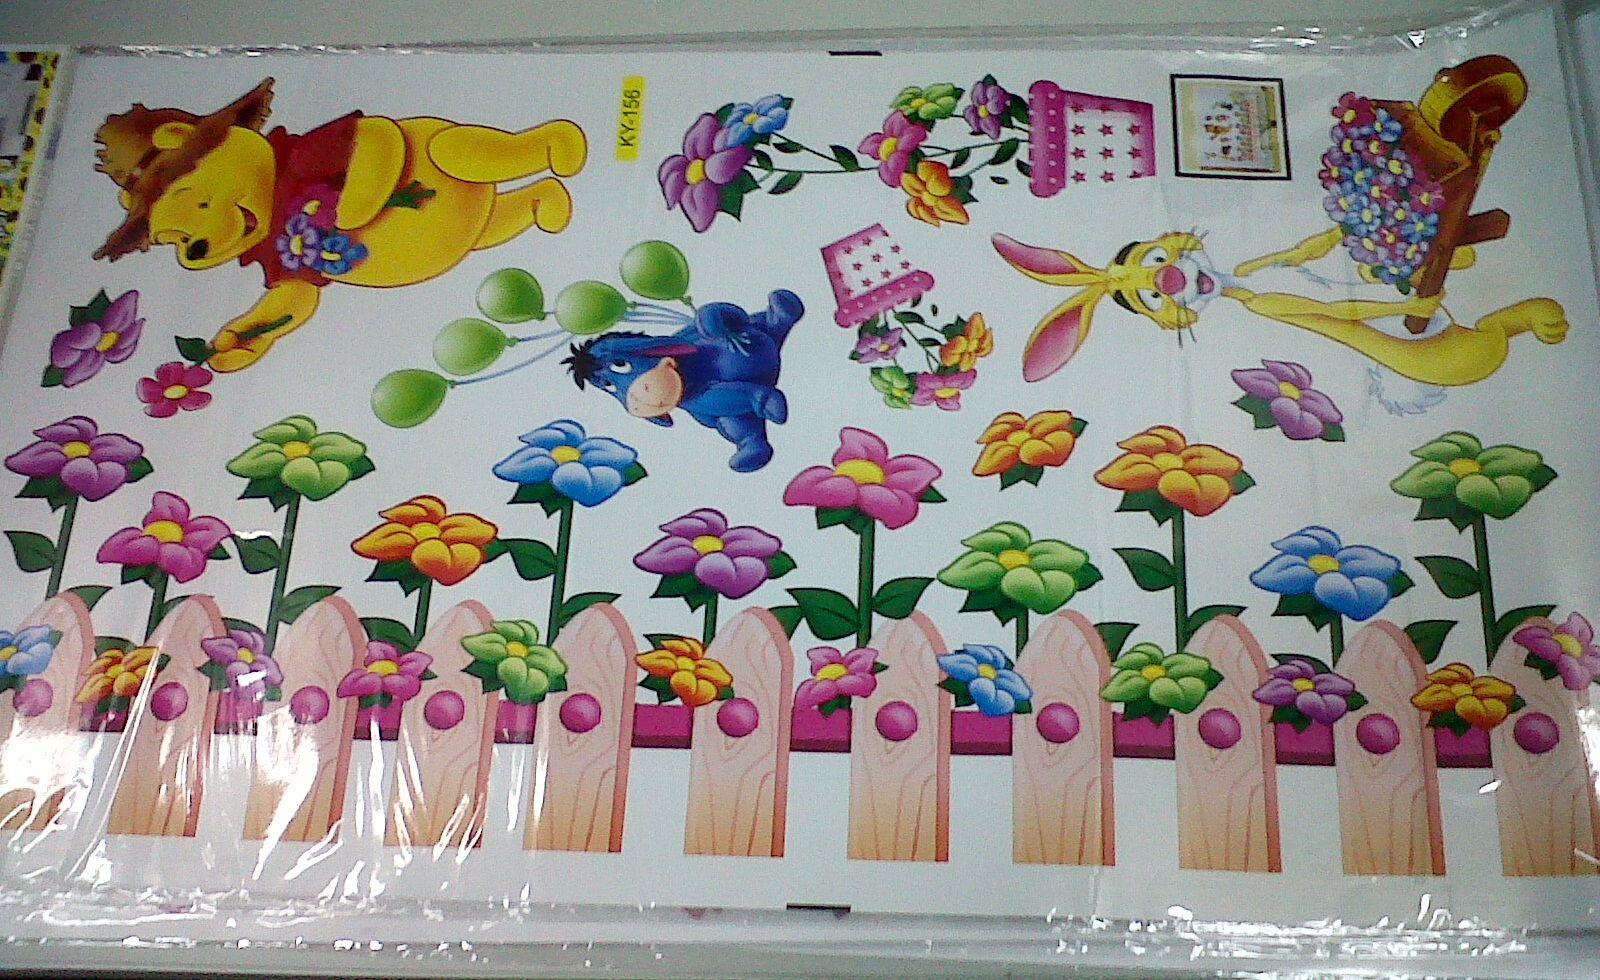 Sticker Tembok Hello Kitty - Stiker Dinding Murah